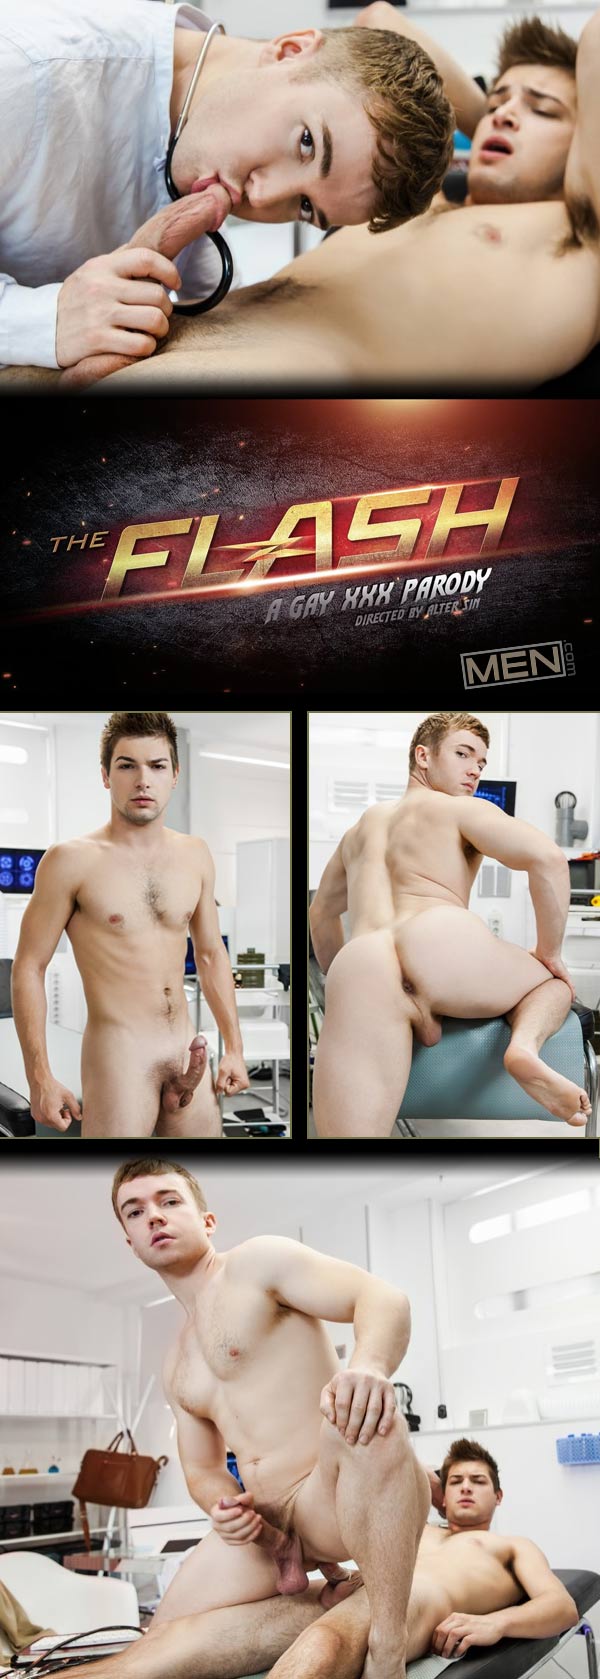 The Flash: A Gay XXX Parody (Johnny Rapid Fucks Gabriel Cross) at Men.com